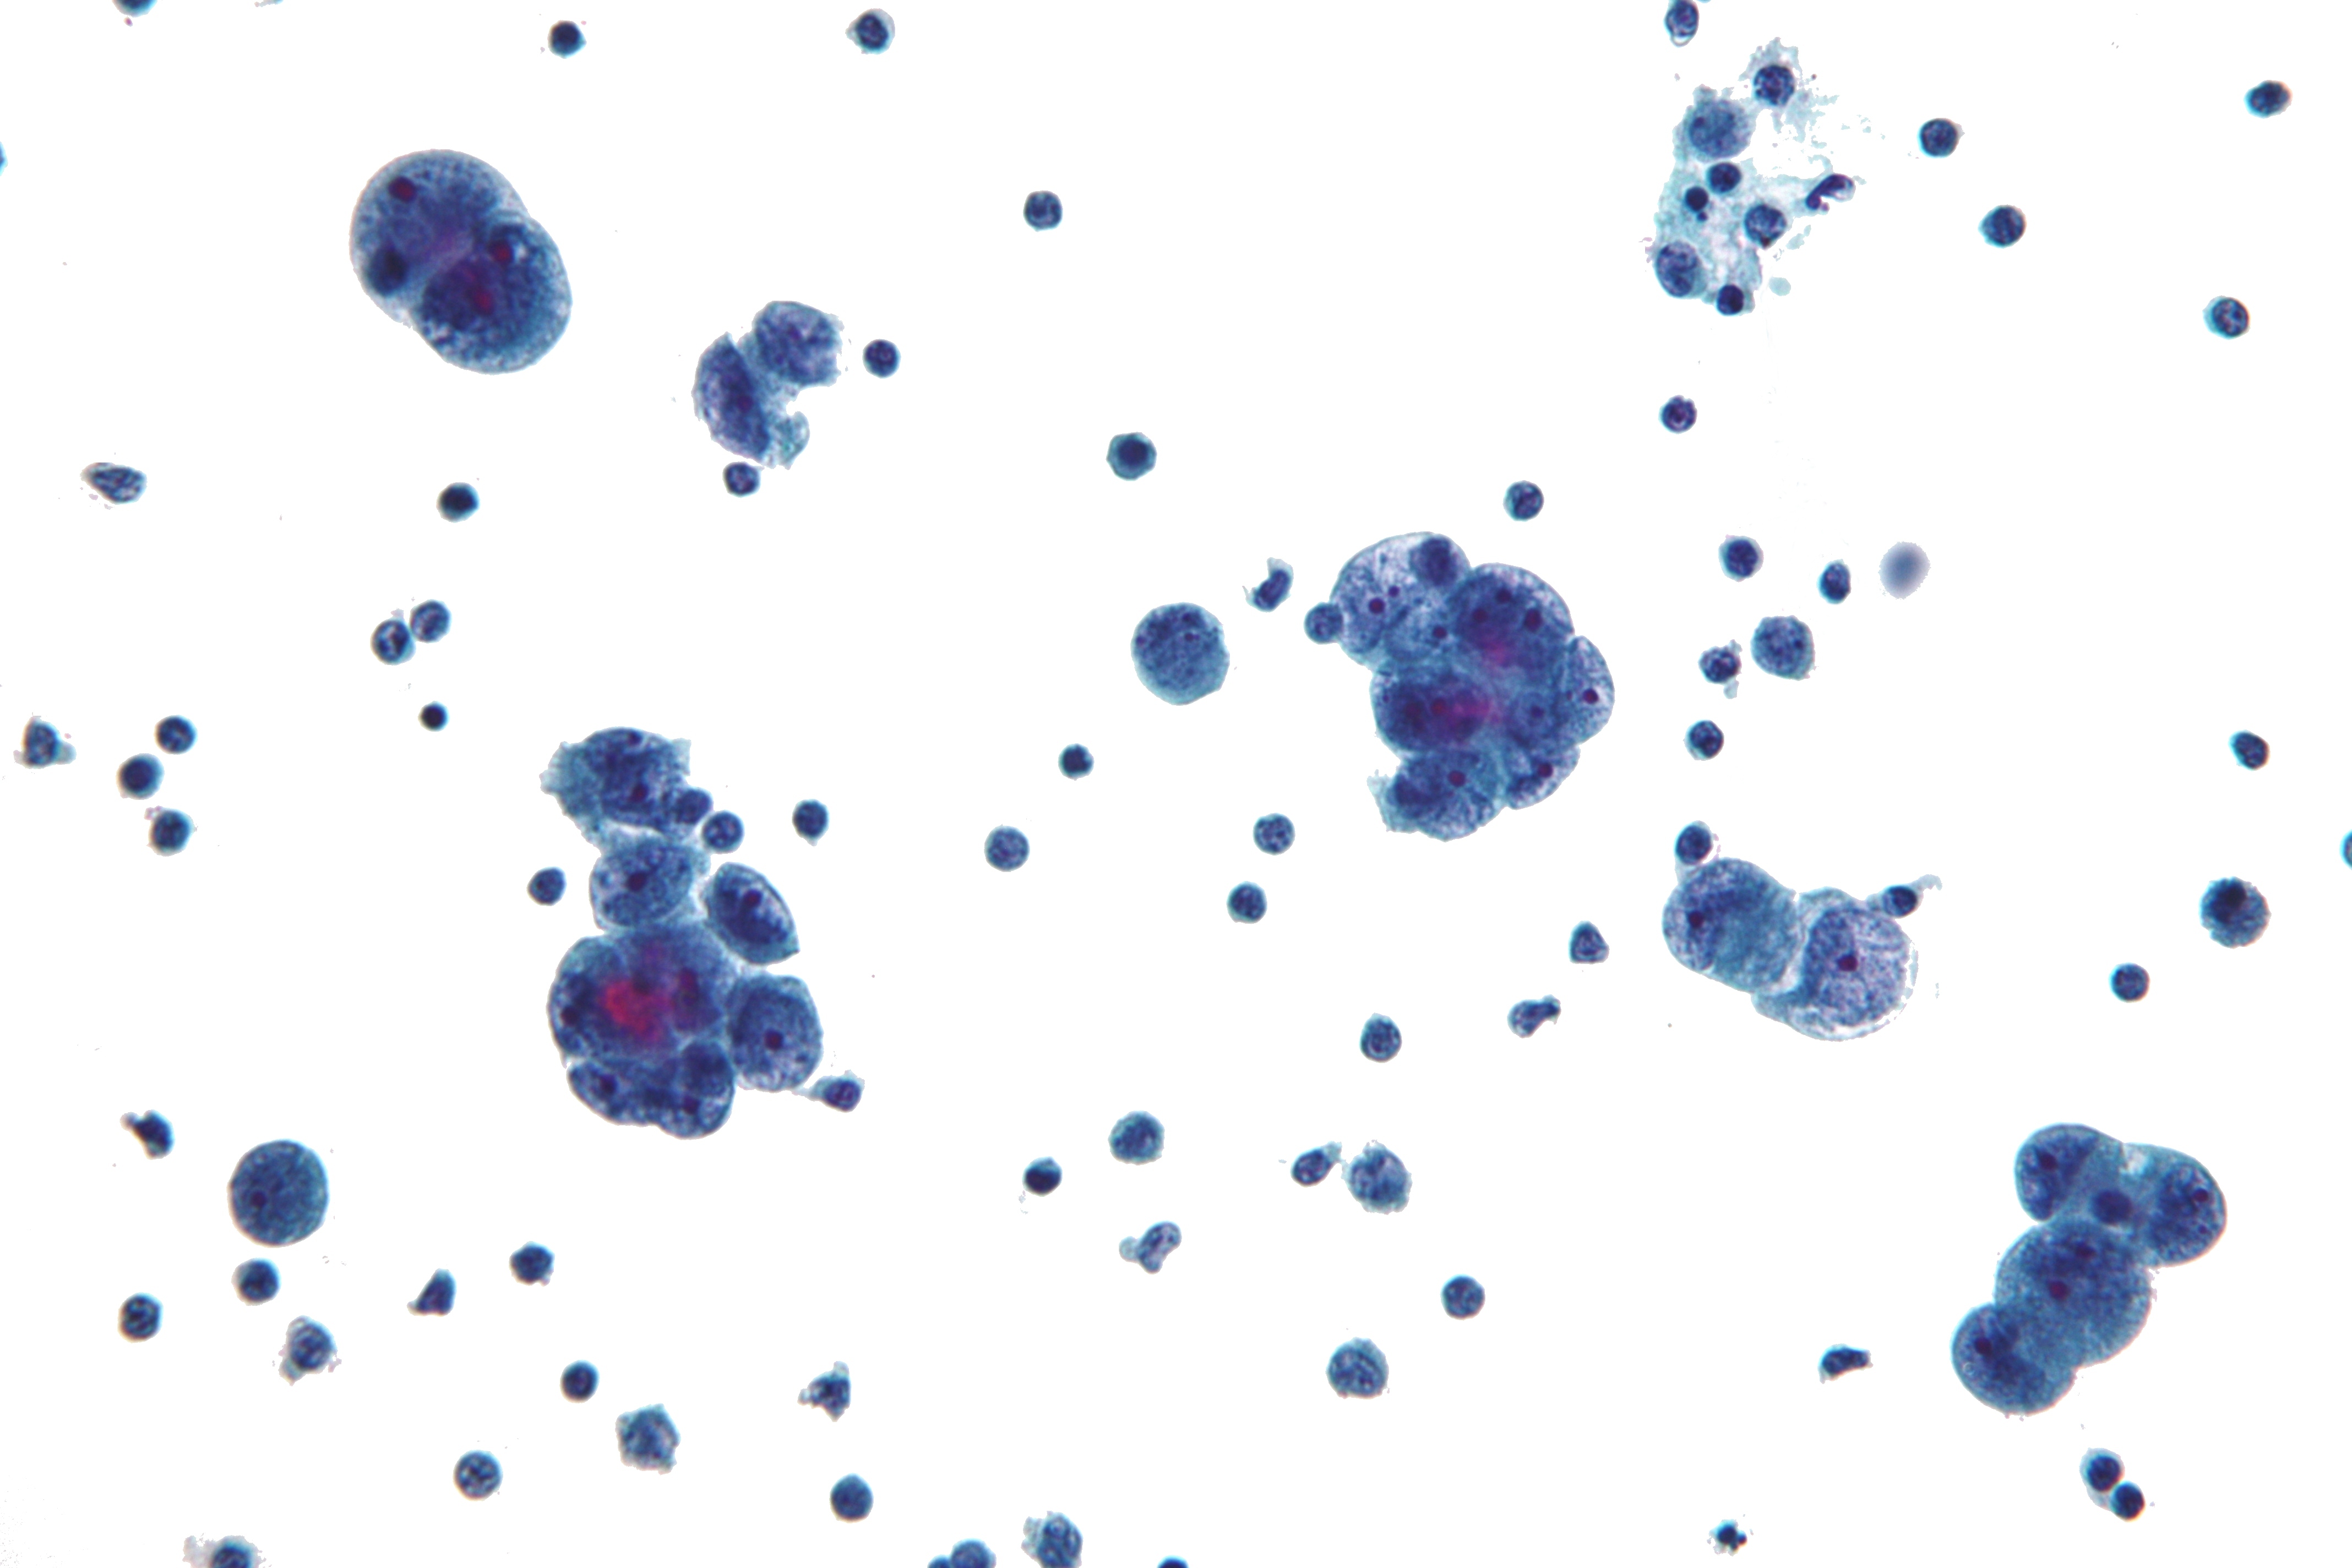 File:Serous carcinoma cytology (1).jpg